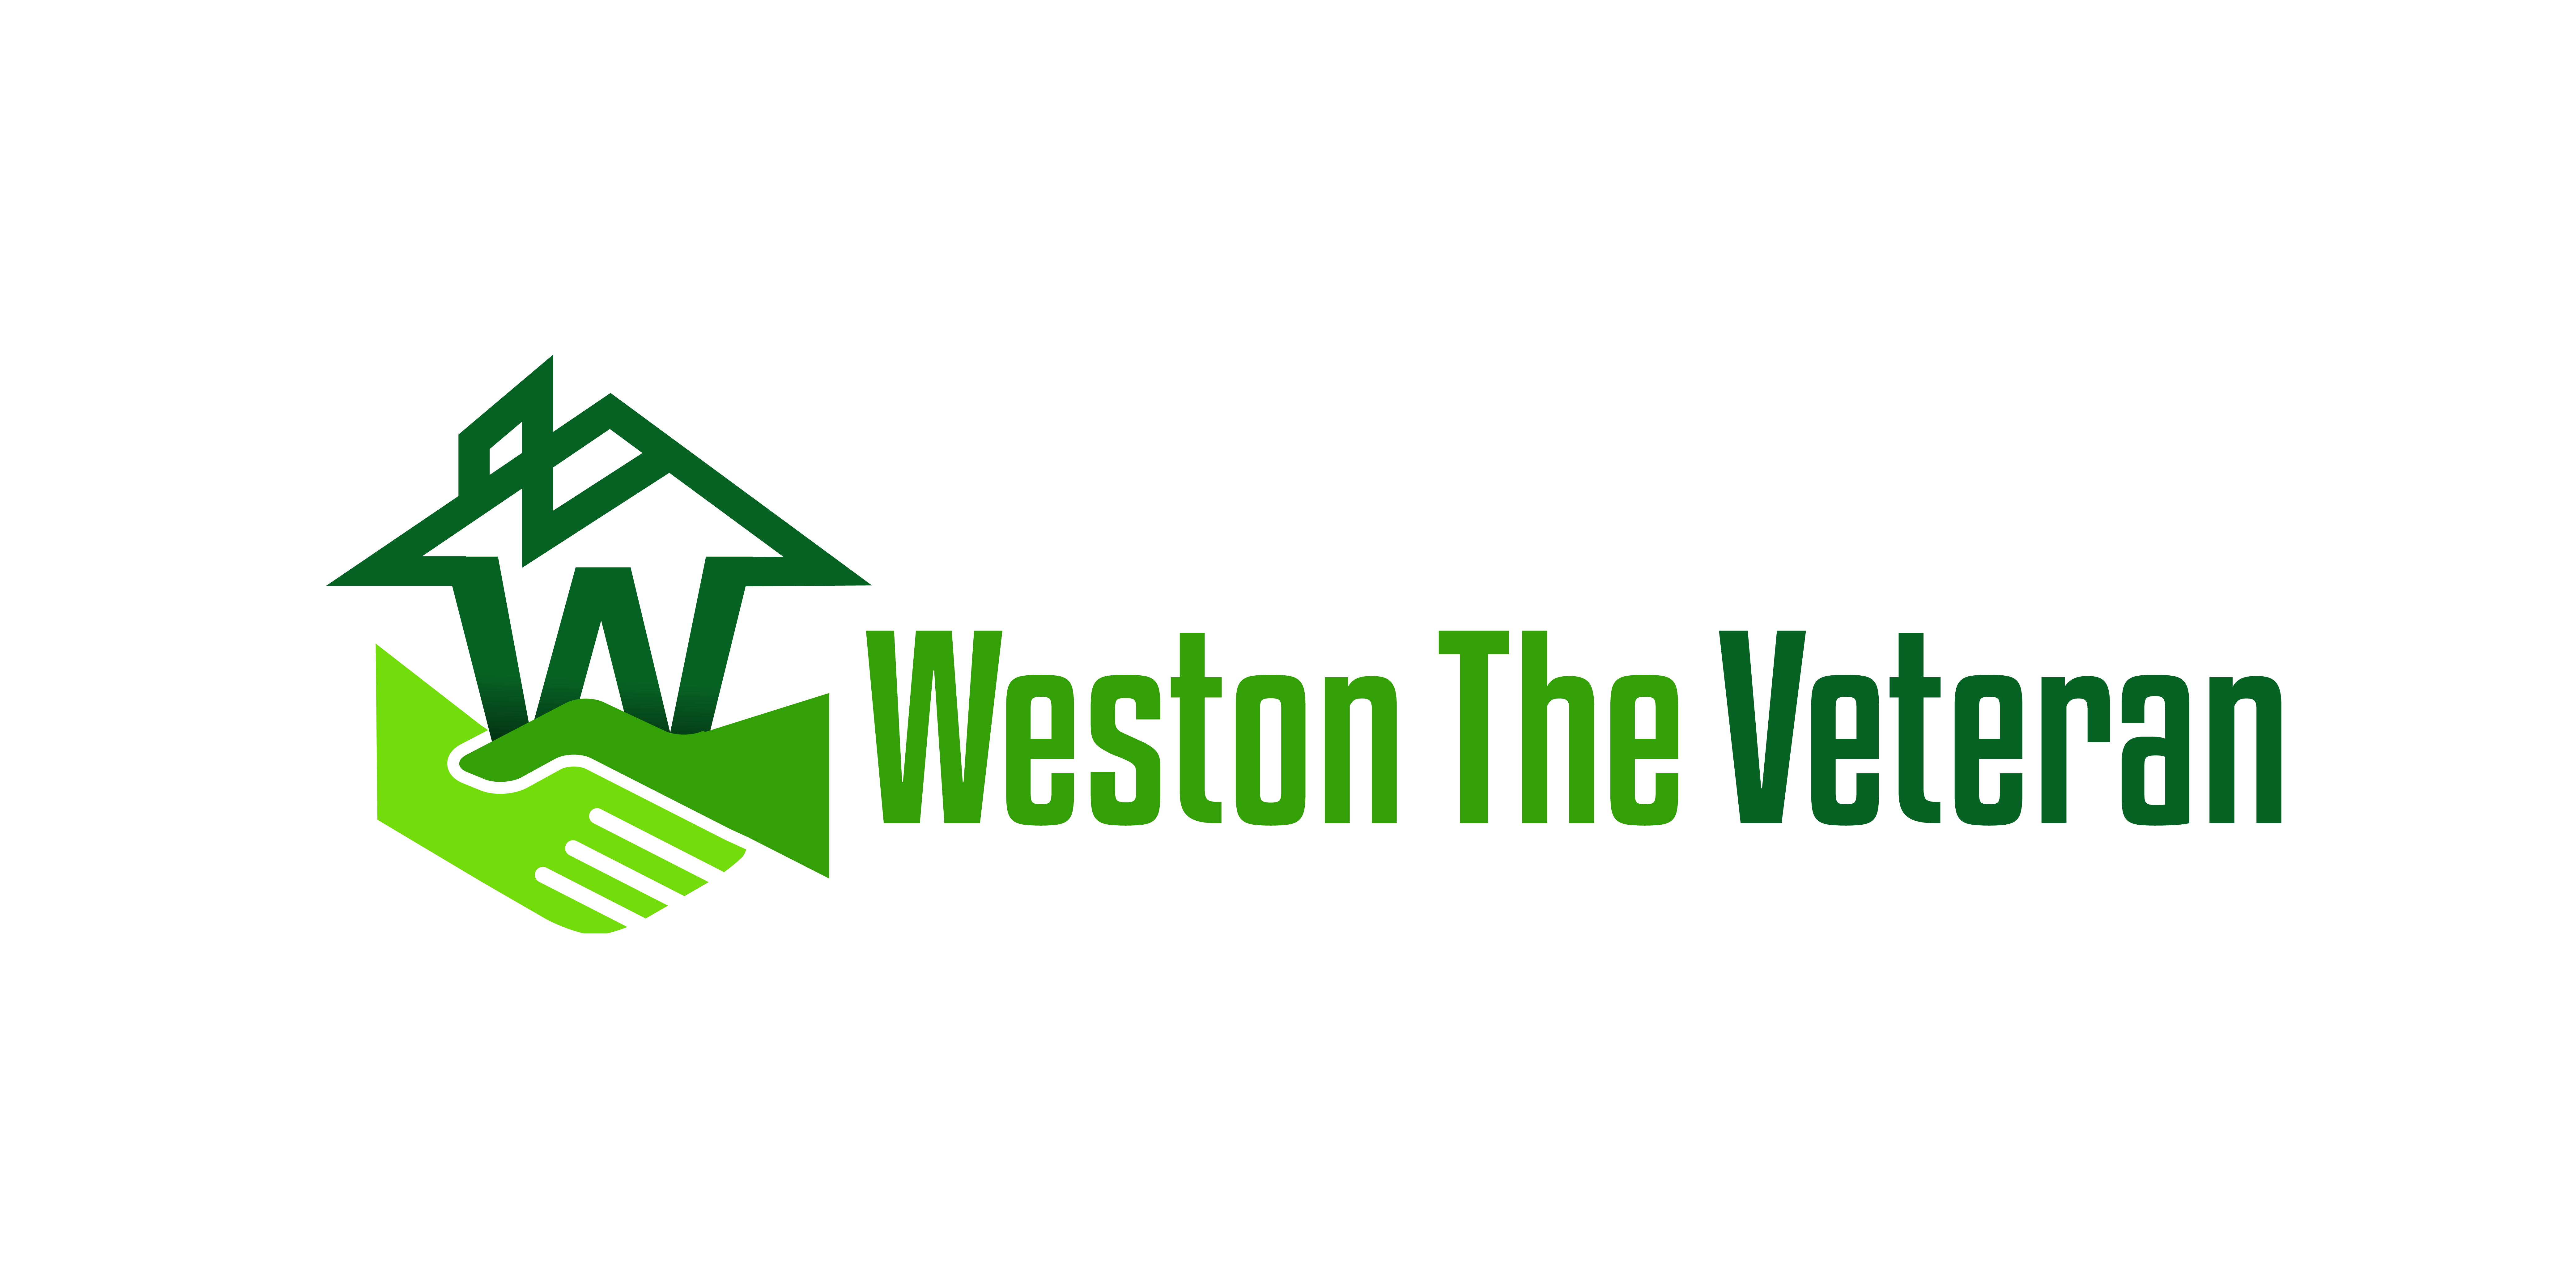 Weston The Veteran